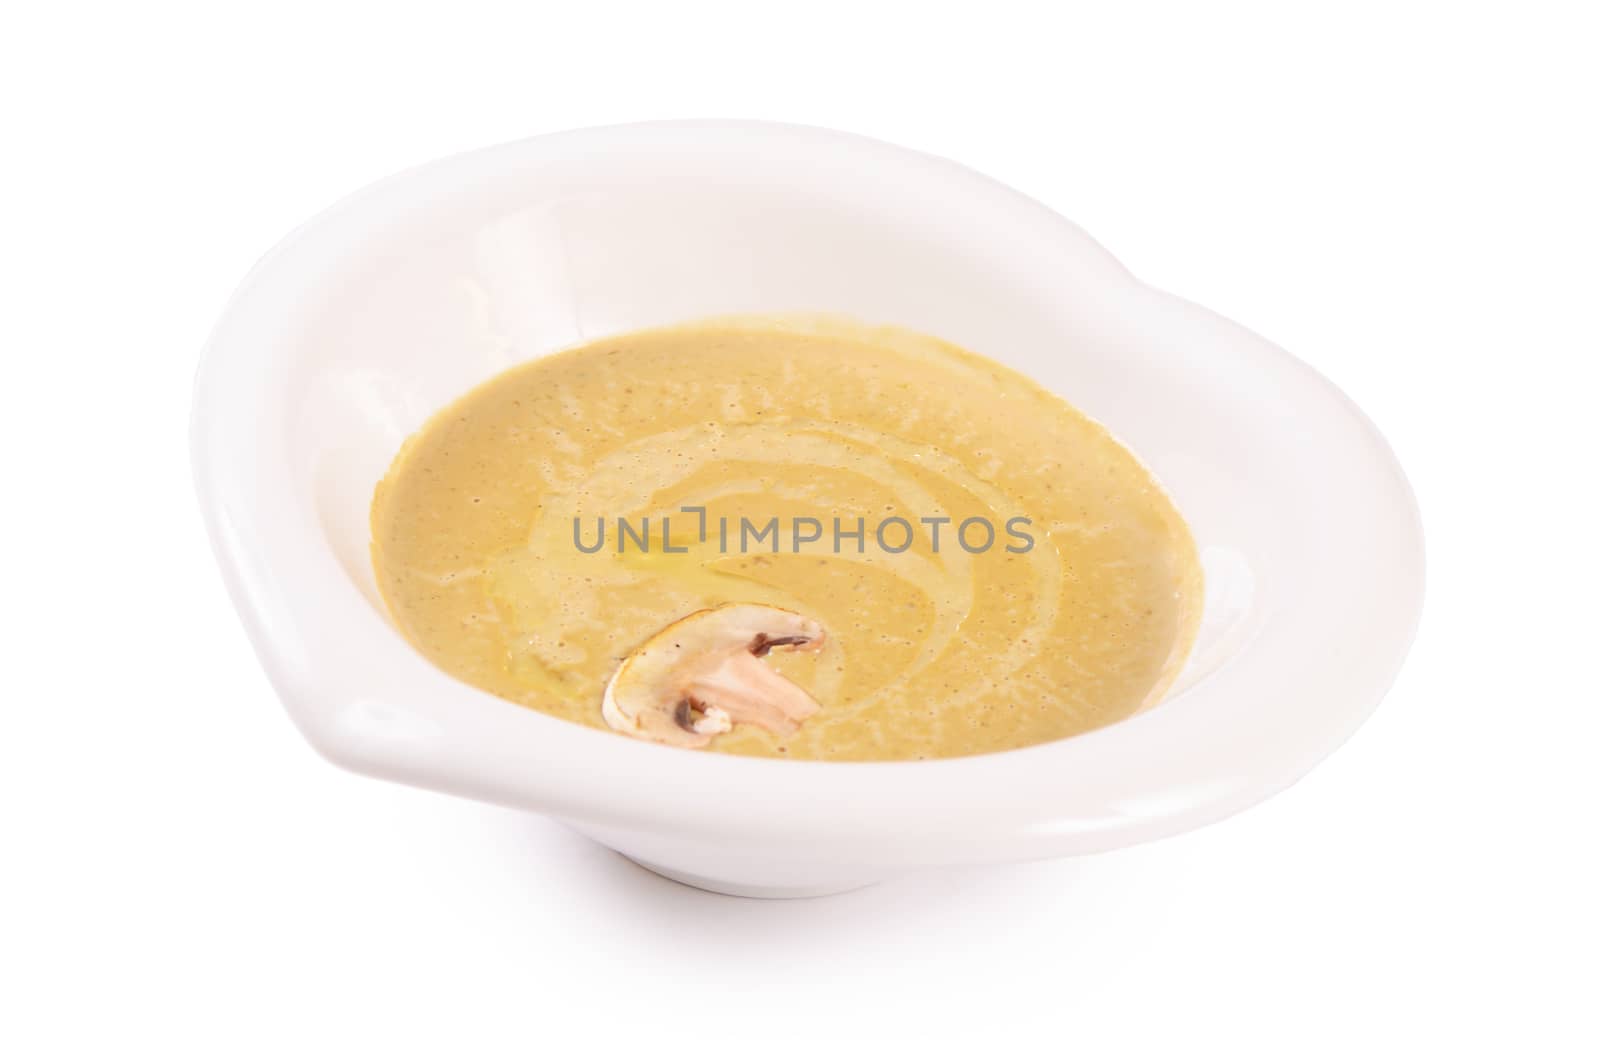 The mushroom cream soup with champignon close up by SvetaVo